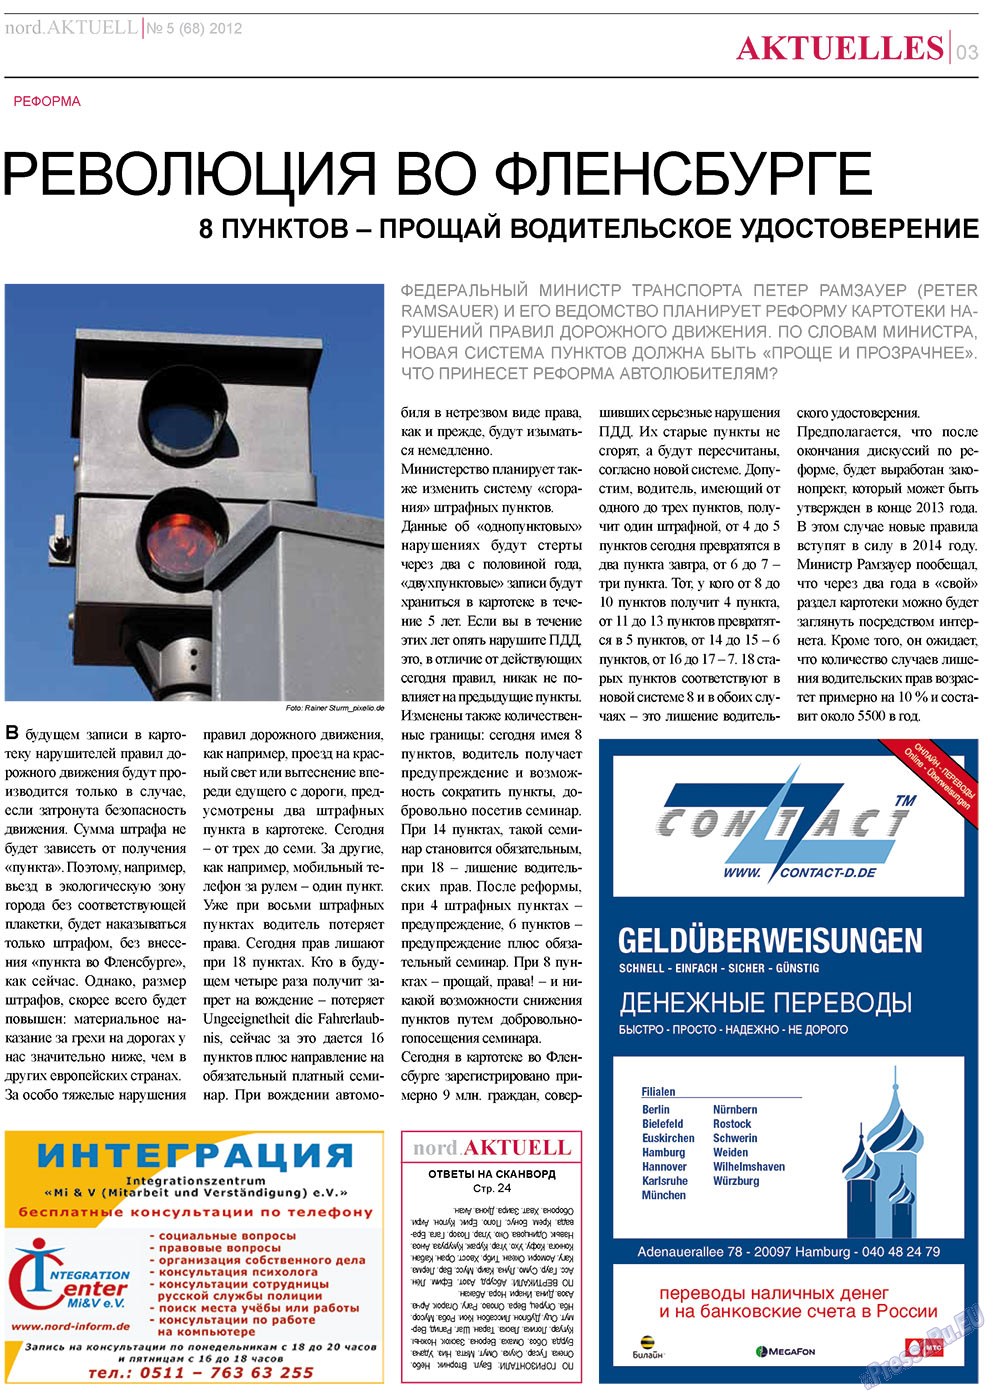 nord.Aktuell, газета. 2012 №5 стр.3